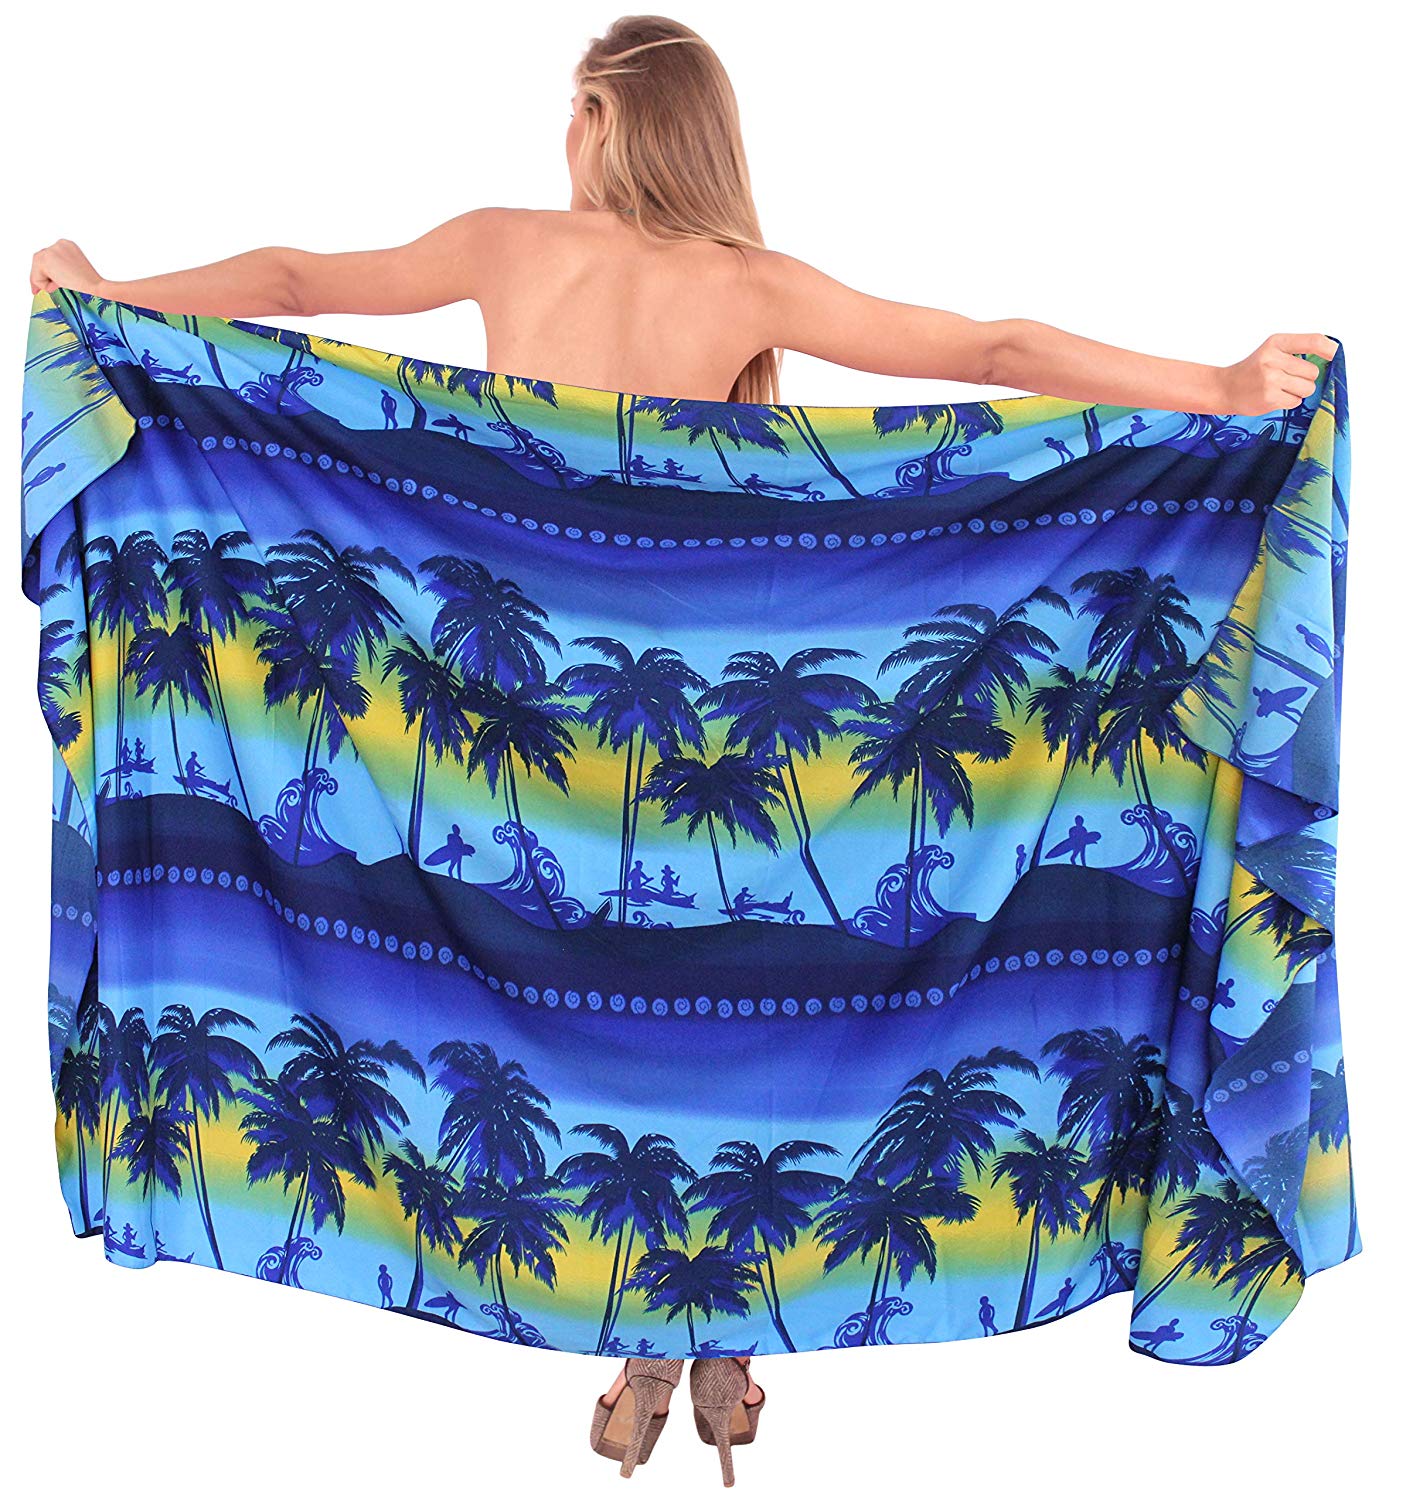 Voda Swim Blue Sarong Cover Up  Blue sarong, Beach time outfits, Bikinis